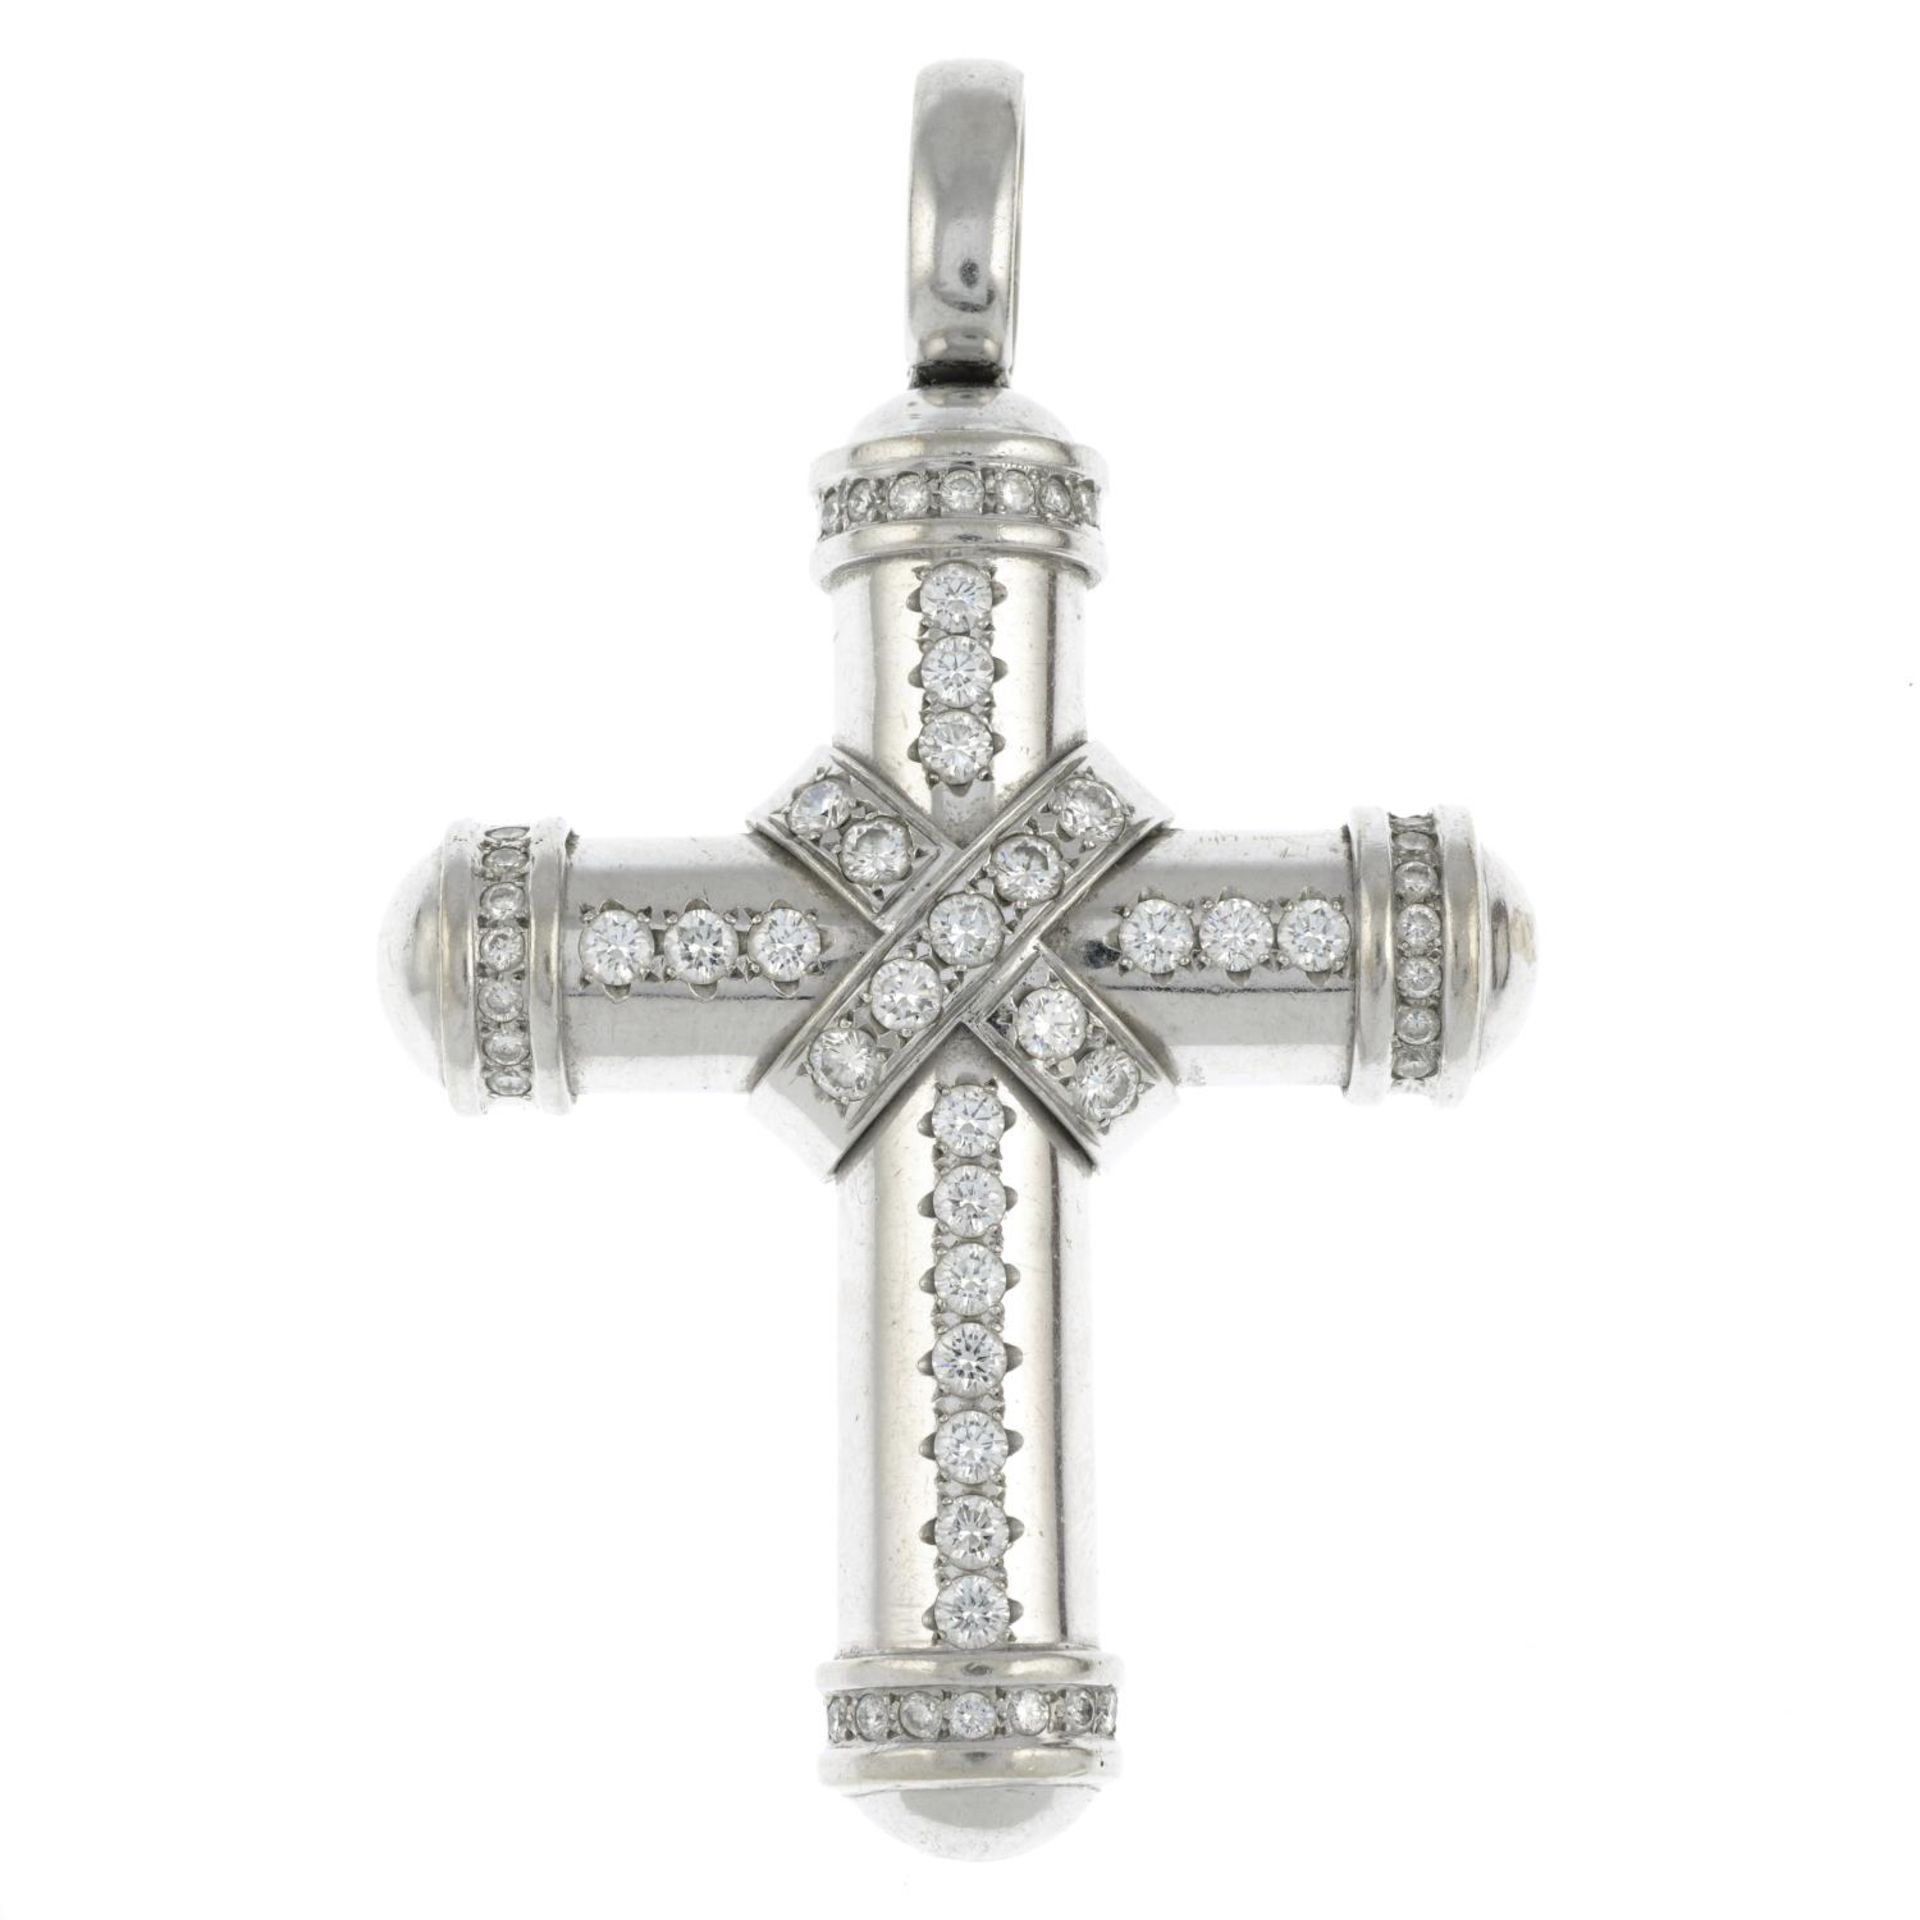 A brilliant-cut diamond cross pendant.